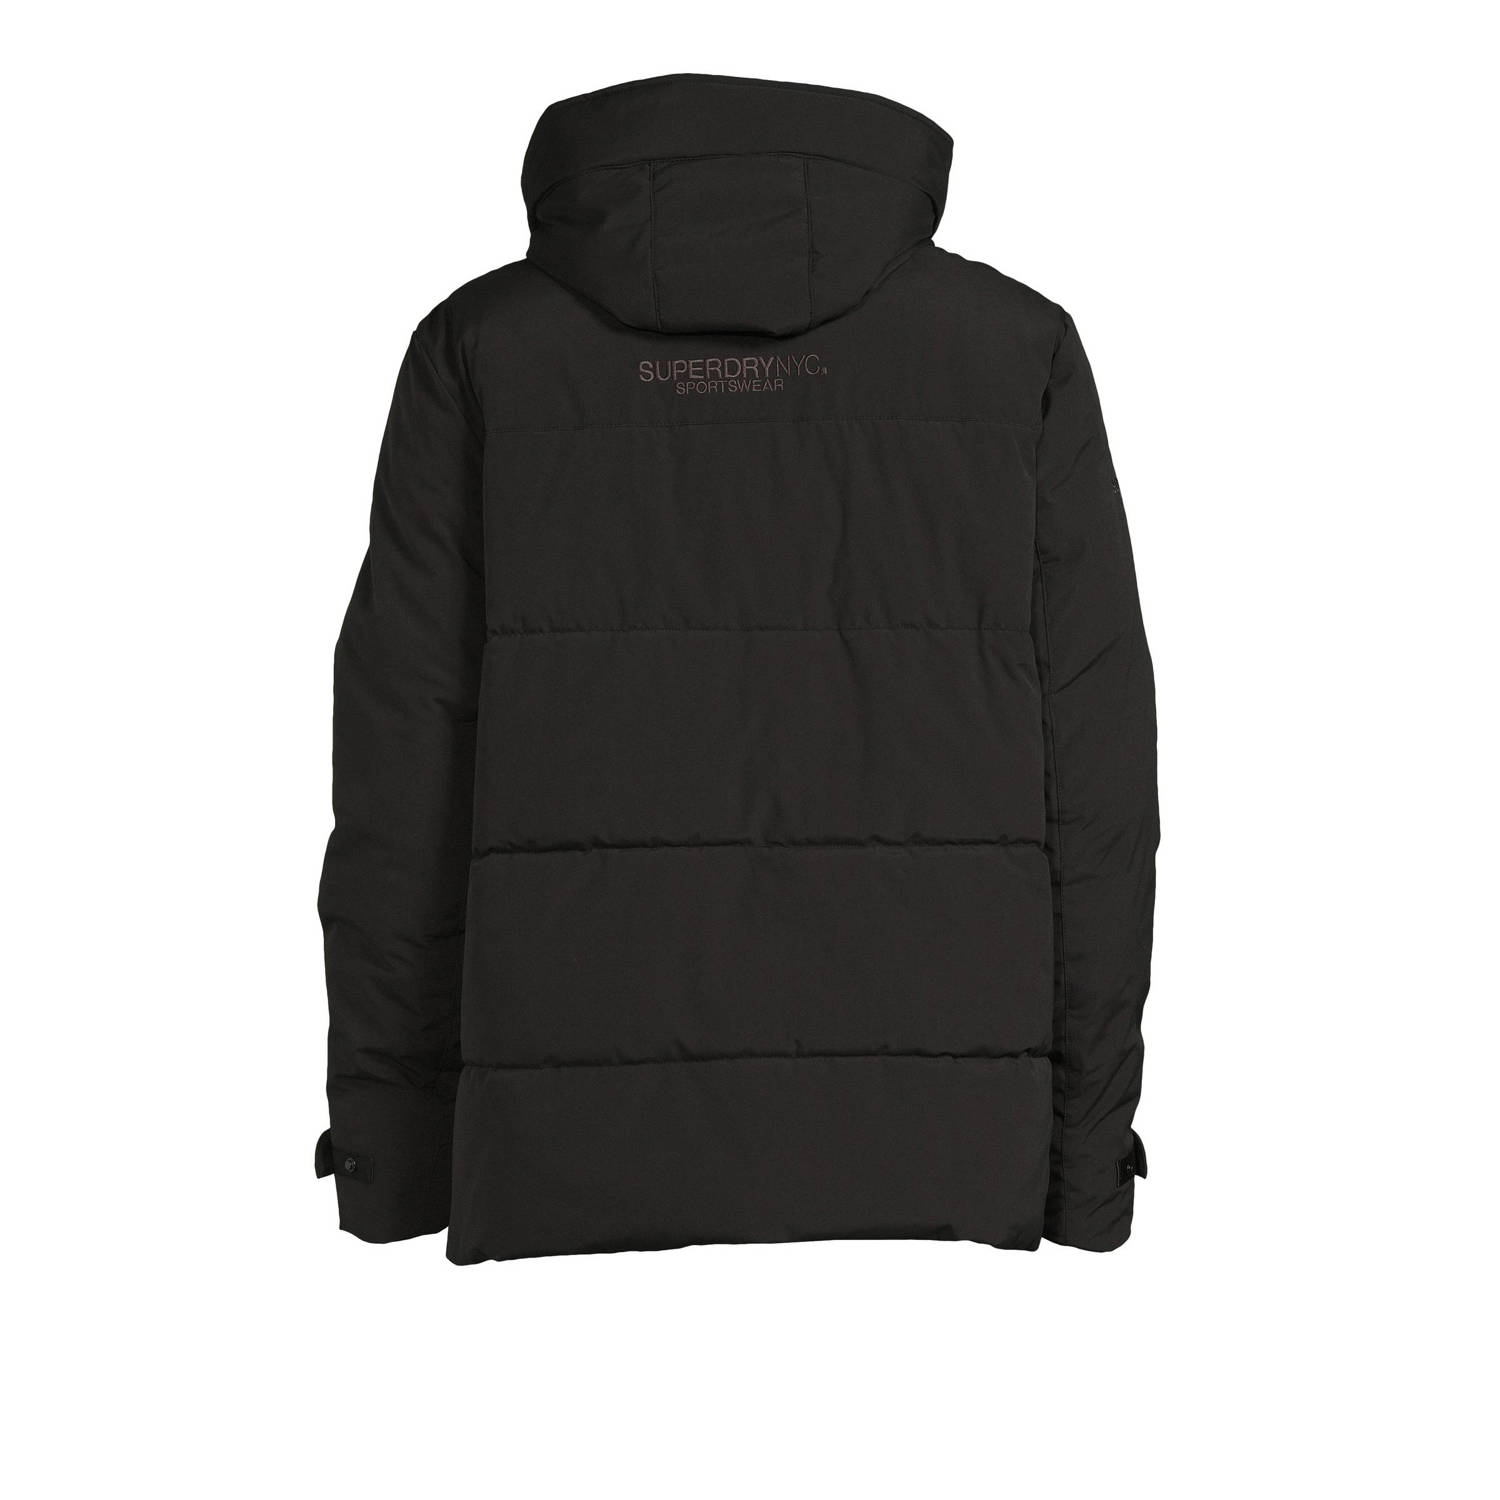 Superdry gewatteerde jas met logo zwart